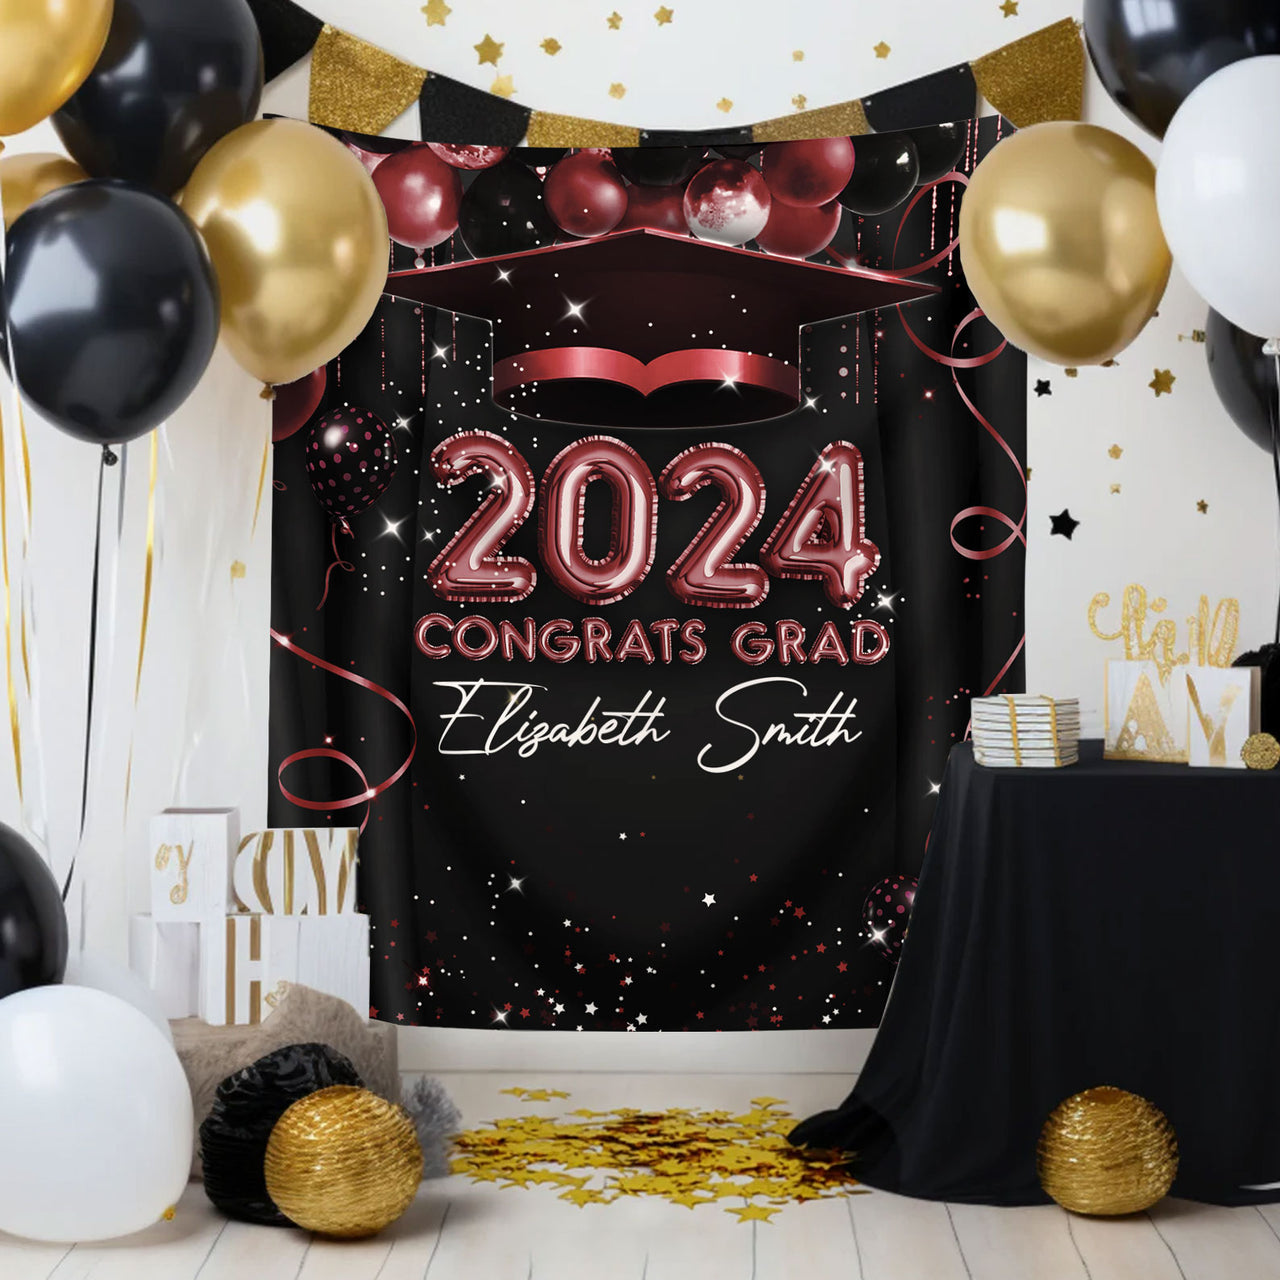 Custom Balloon Style Congrats Class Of 2024 Graduation Backdrop, Graduation Party Decorations FC